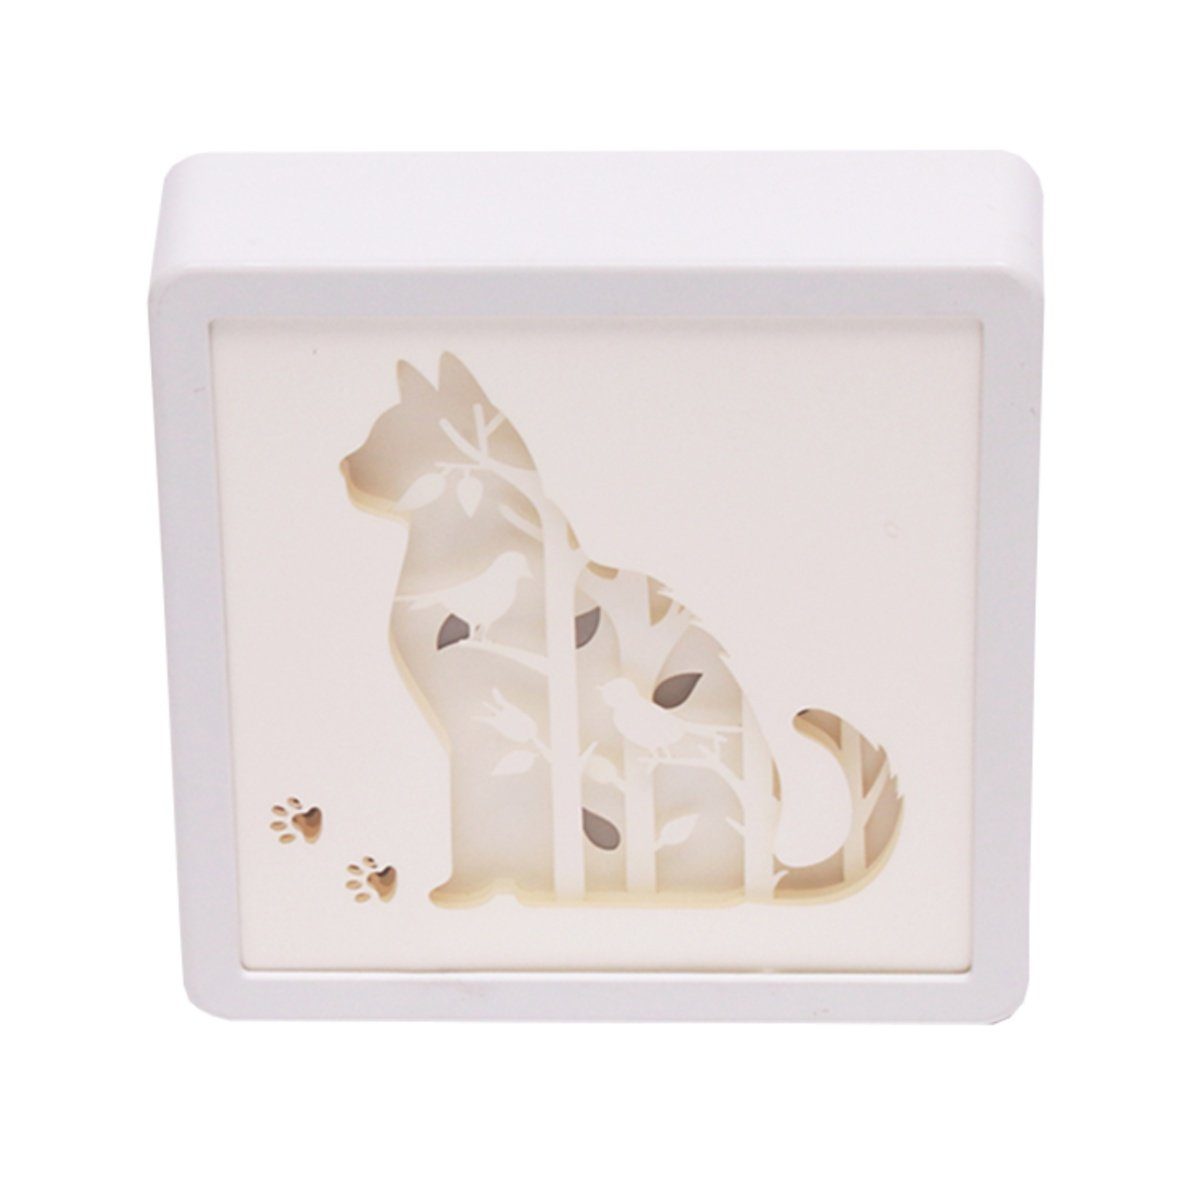 CiM LED Lichtbox 3D Papercut SQUARE- Cat, LED fest integriert, Warmweiß, 16x5x16cm, Shadowbox, Wohnaccessoire, Nachtlicht, kabellose Dekoration